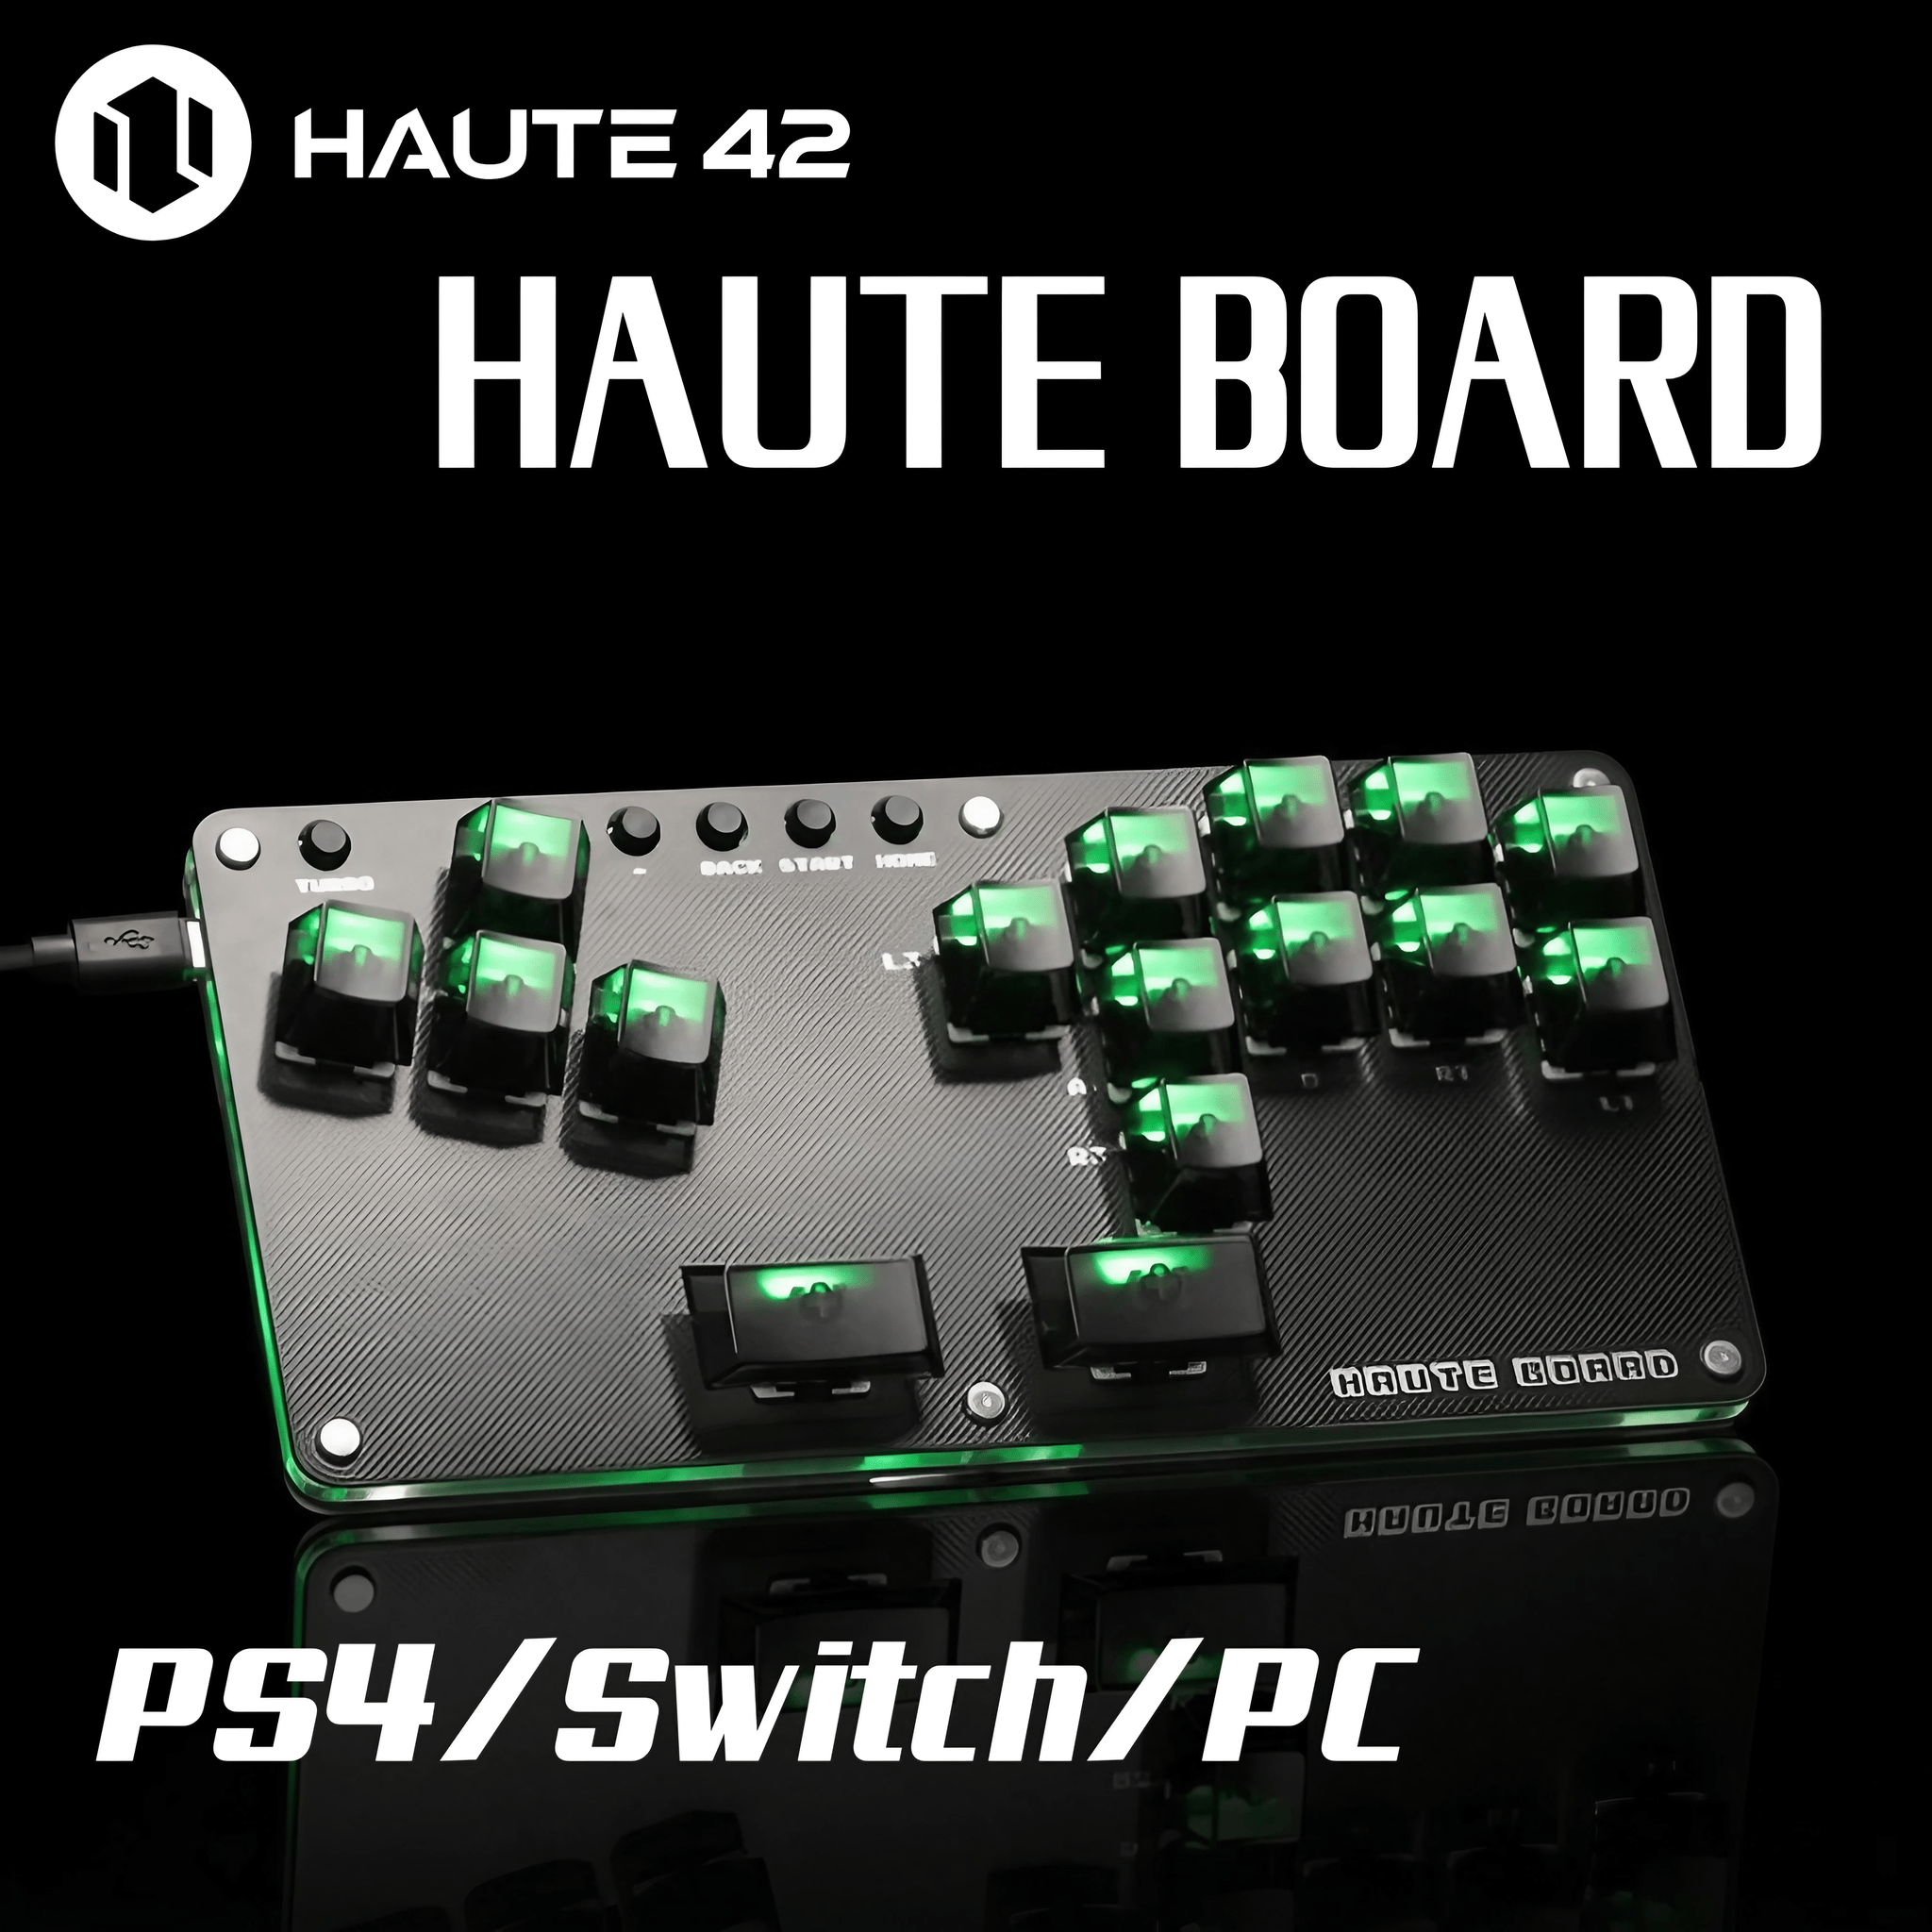 CIELOGAMES】 Haute42 Haute Board | キーボード型レバーレス 